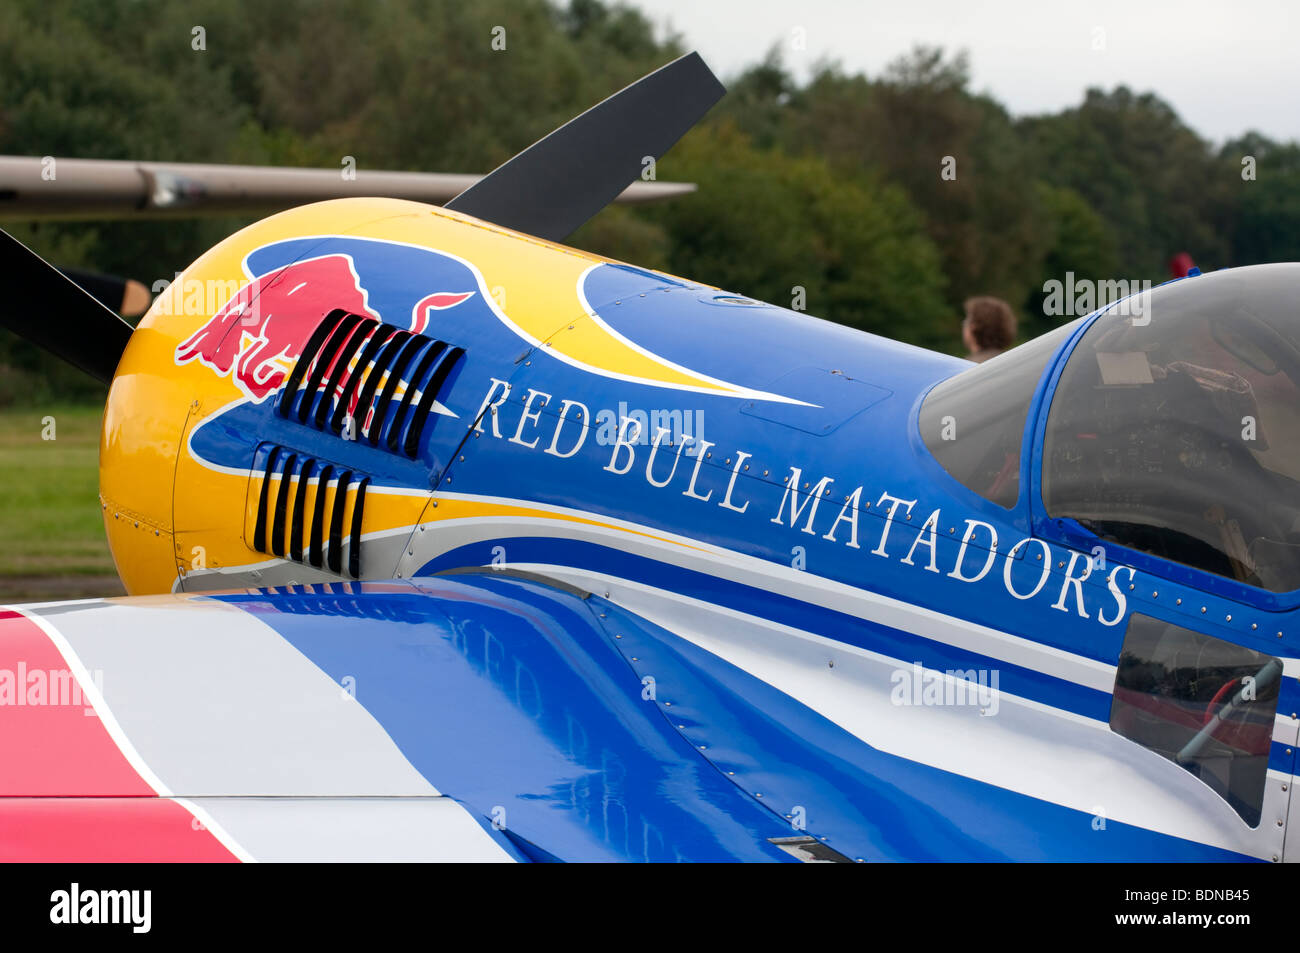 Red Bull mattatori antenna team display Foto Stock